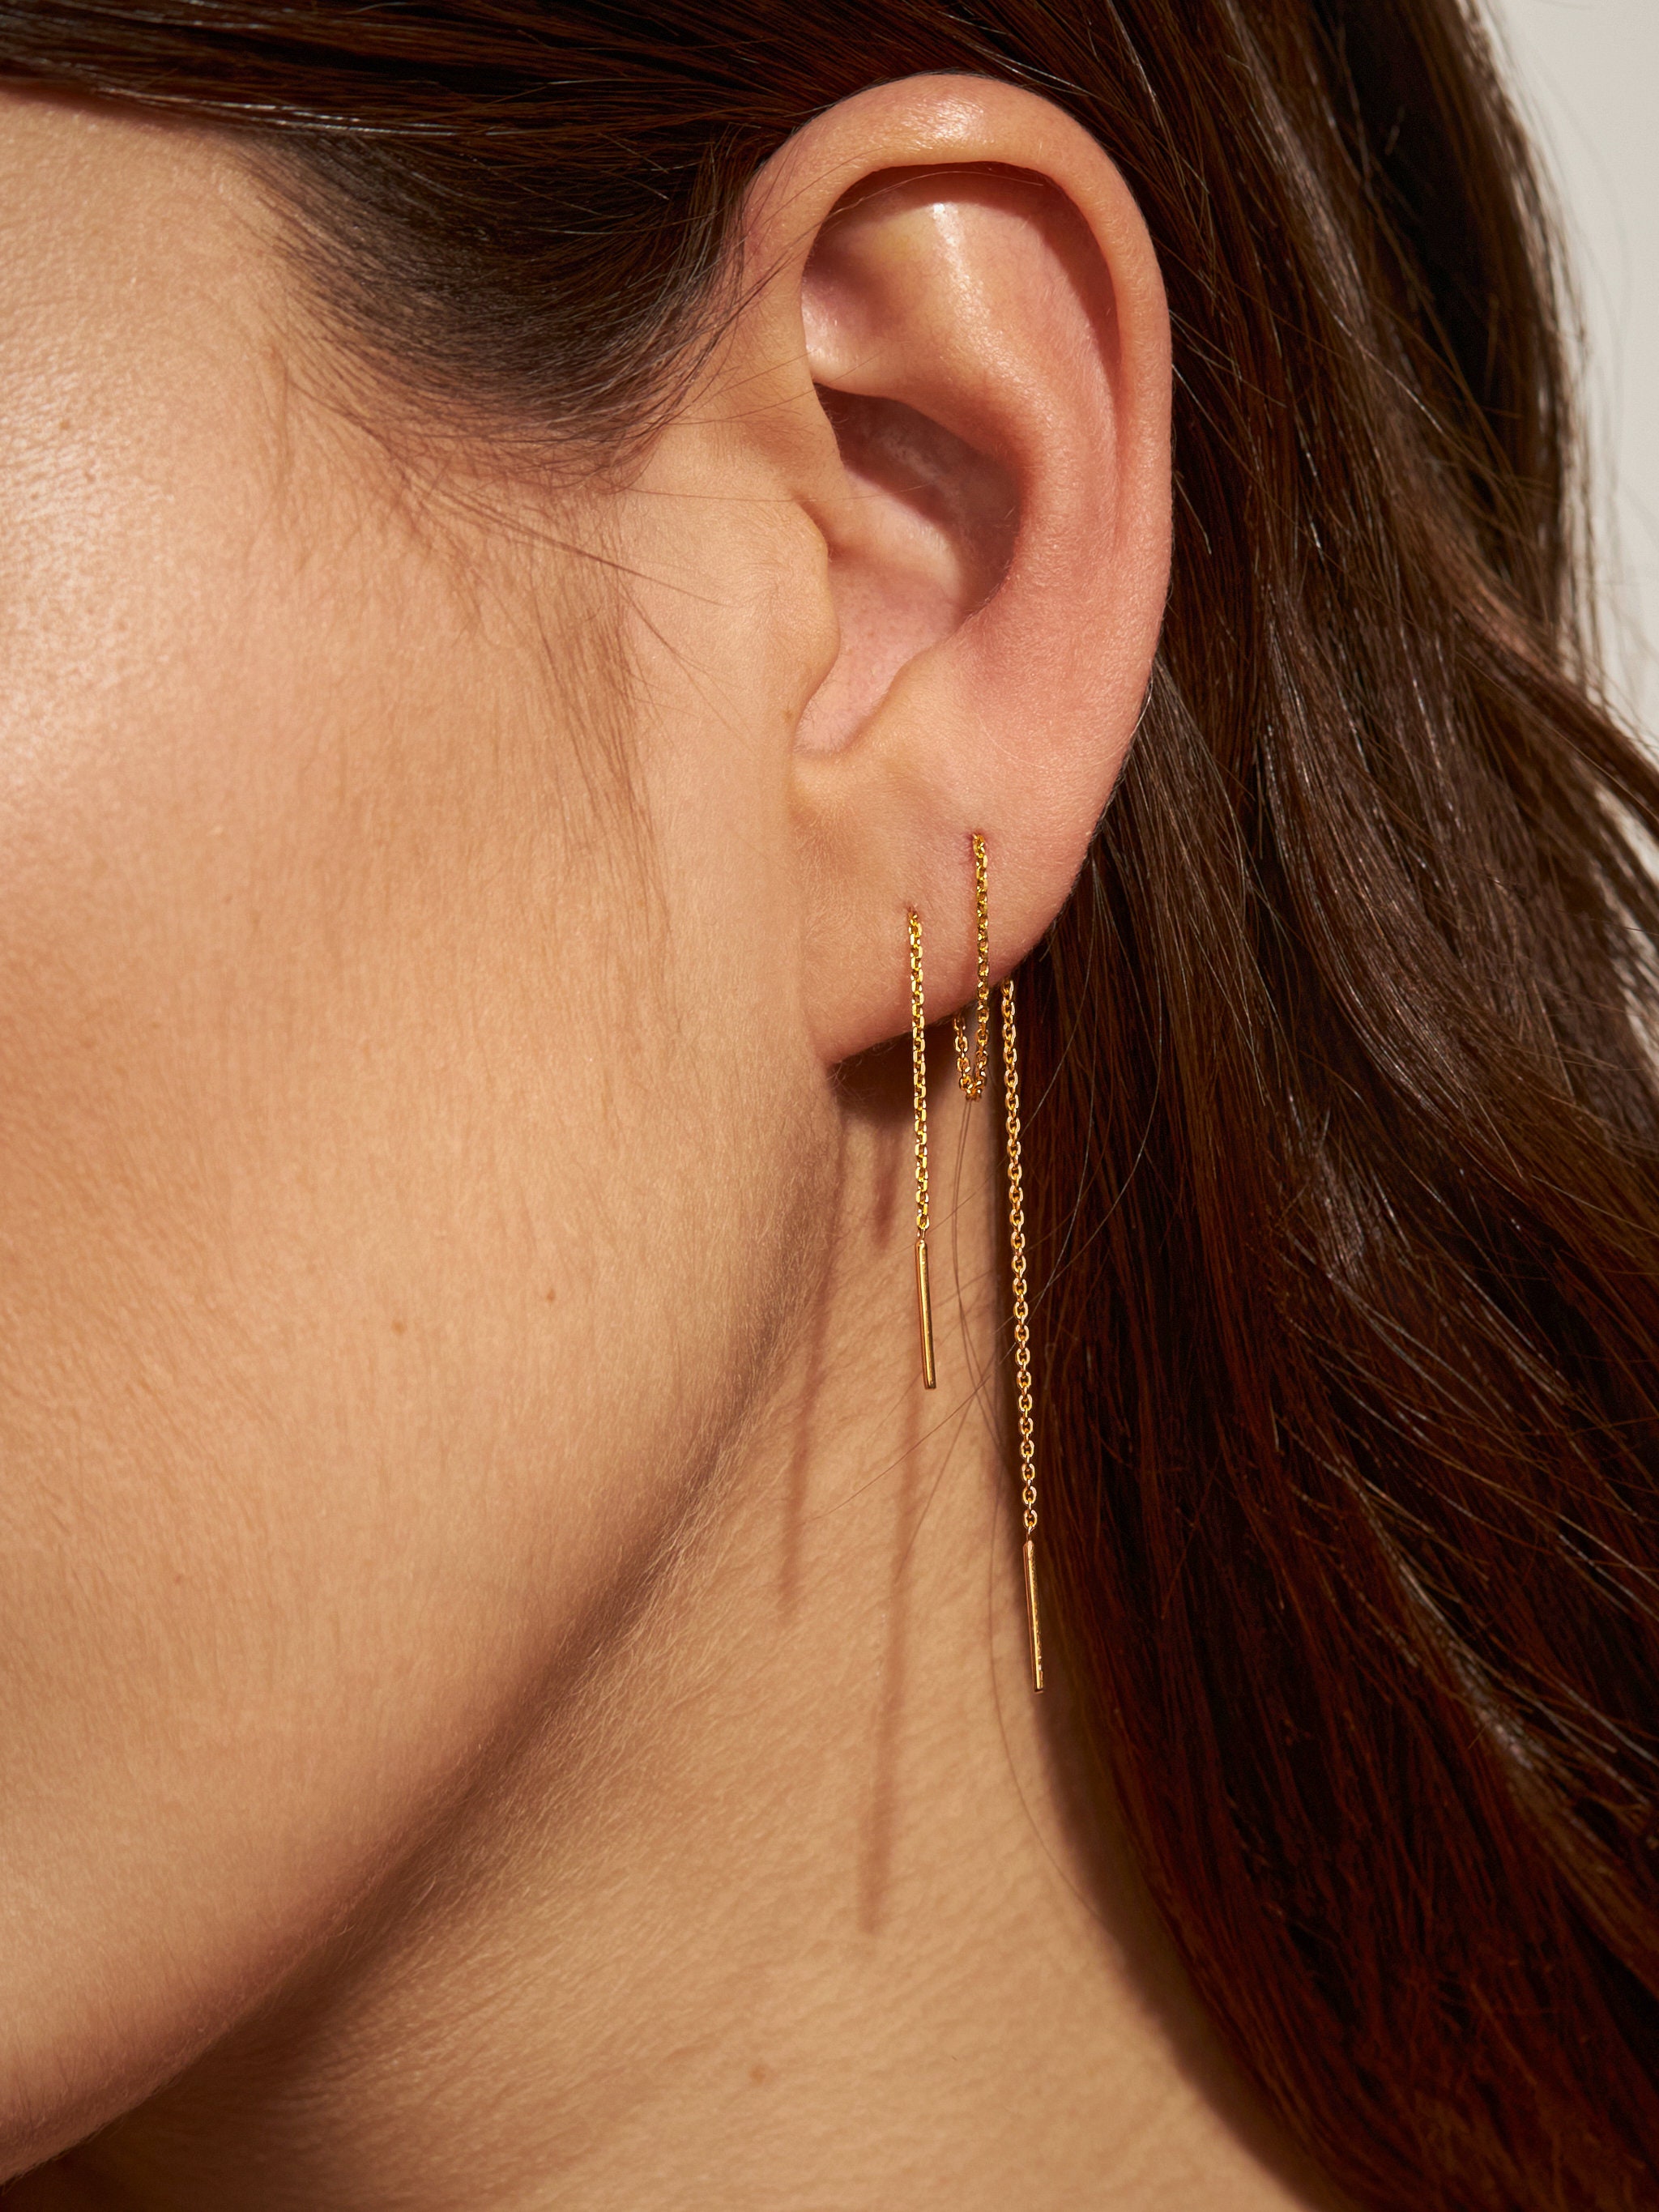 Threader Earrings Thin Chain Dangle Edgy Earrings Cartilage | Etsy